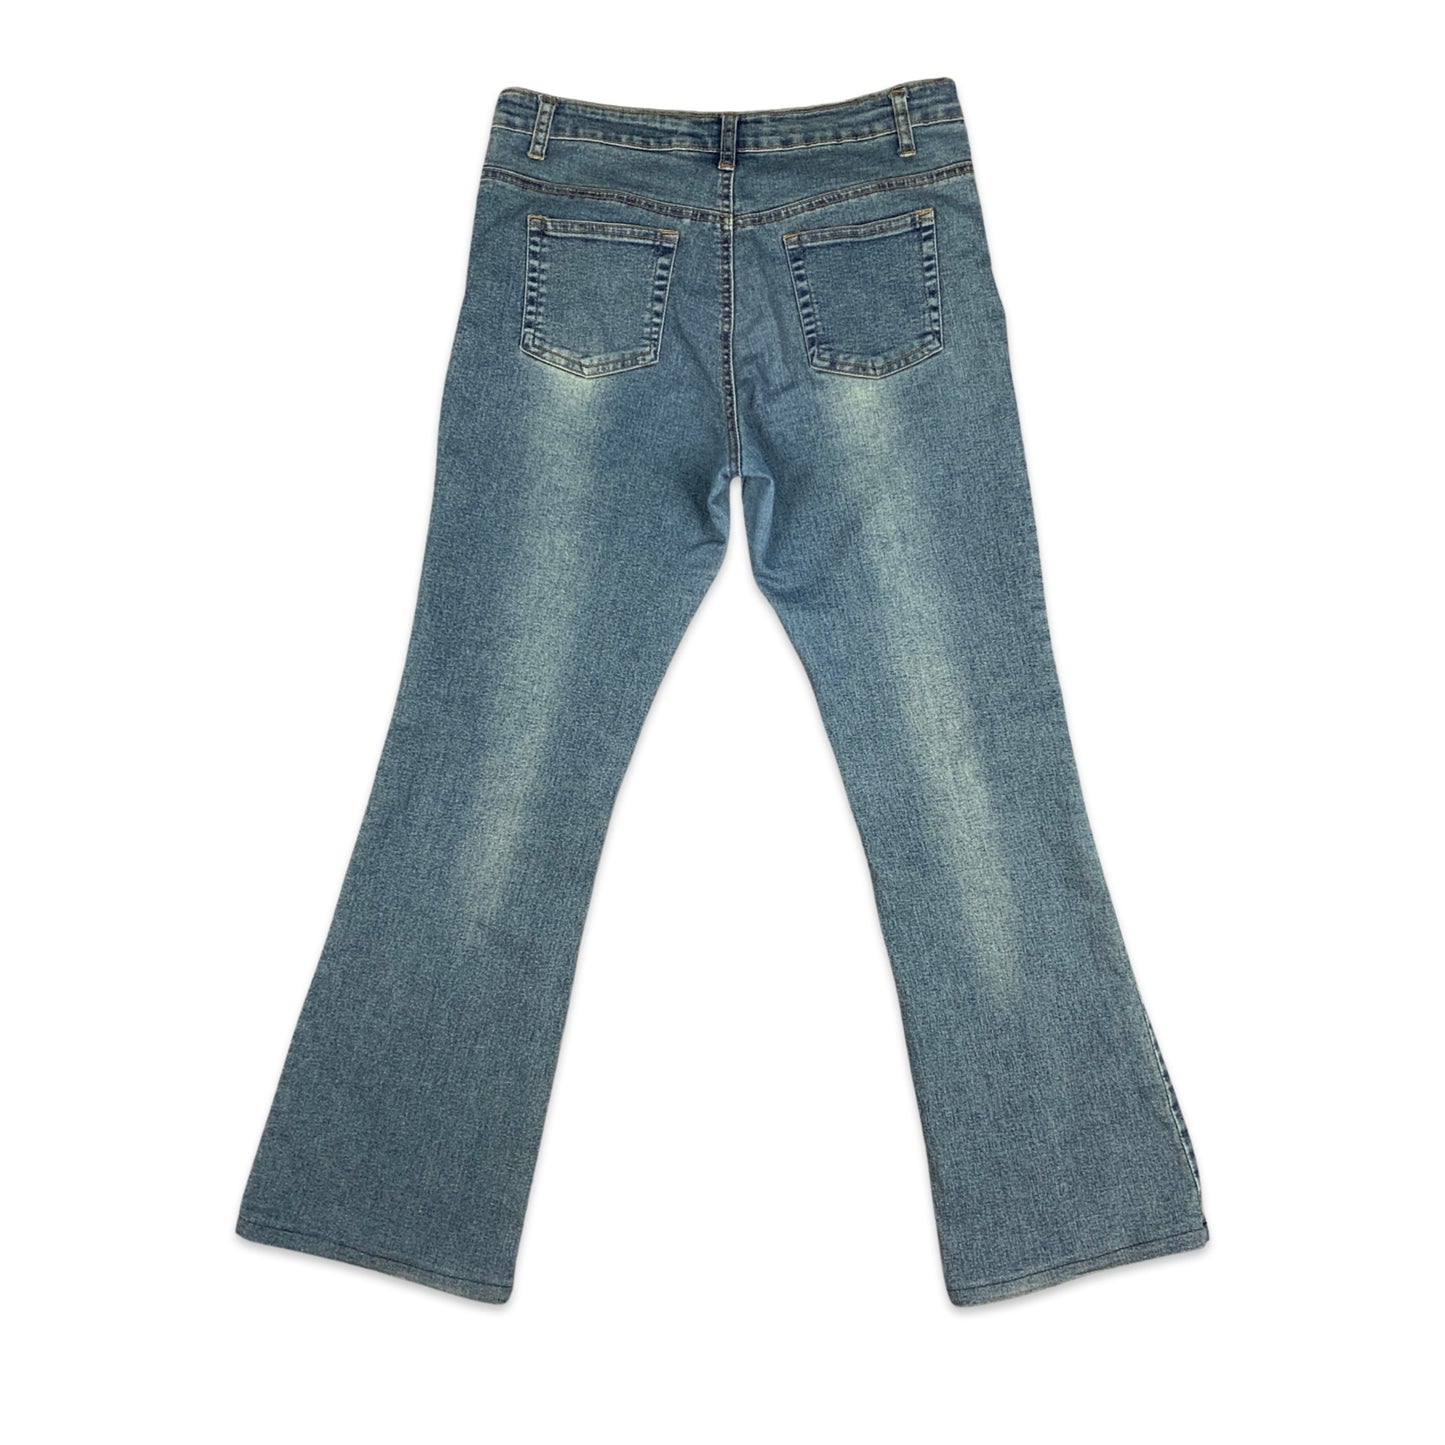 90s Y2K Blue Denim Embroidered Flower Bootcut Jeans 12 14